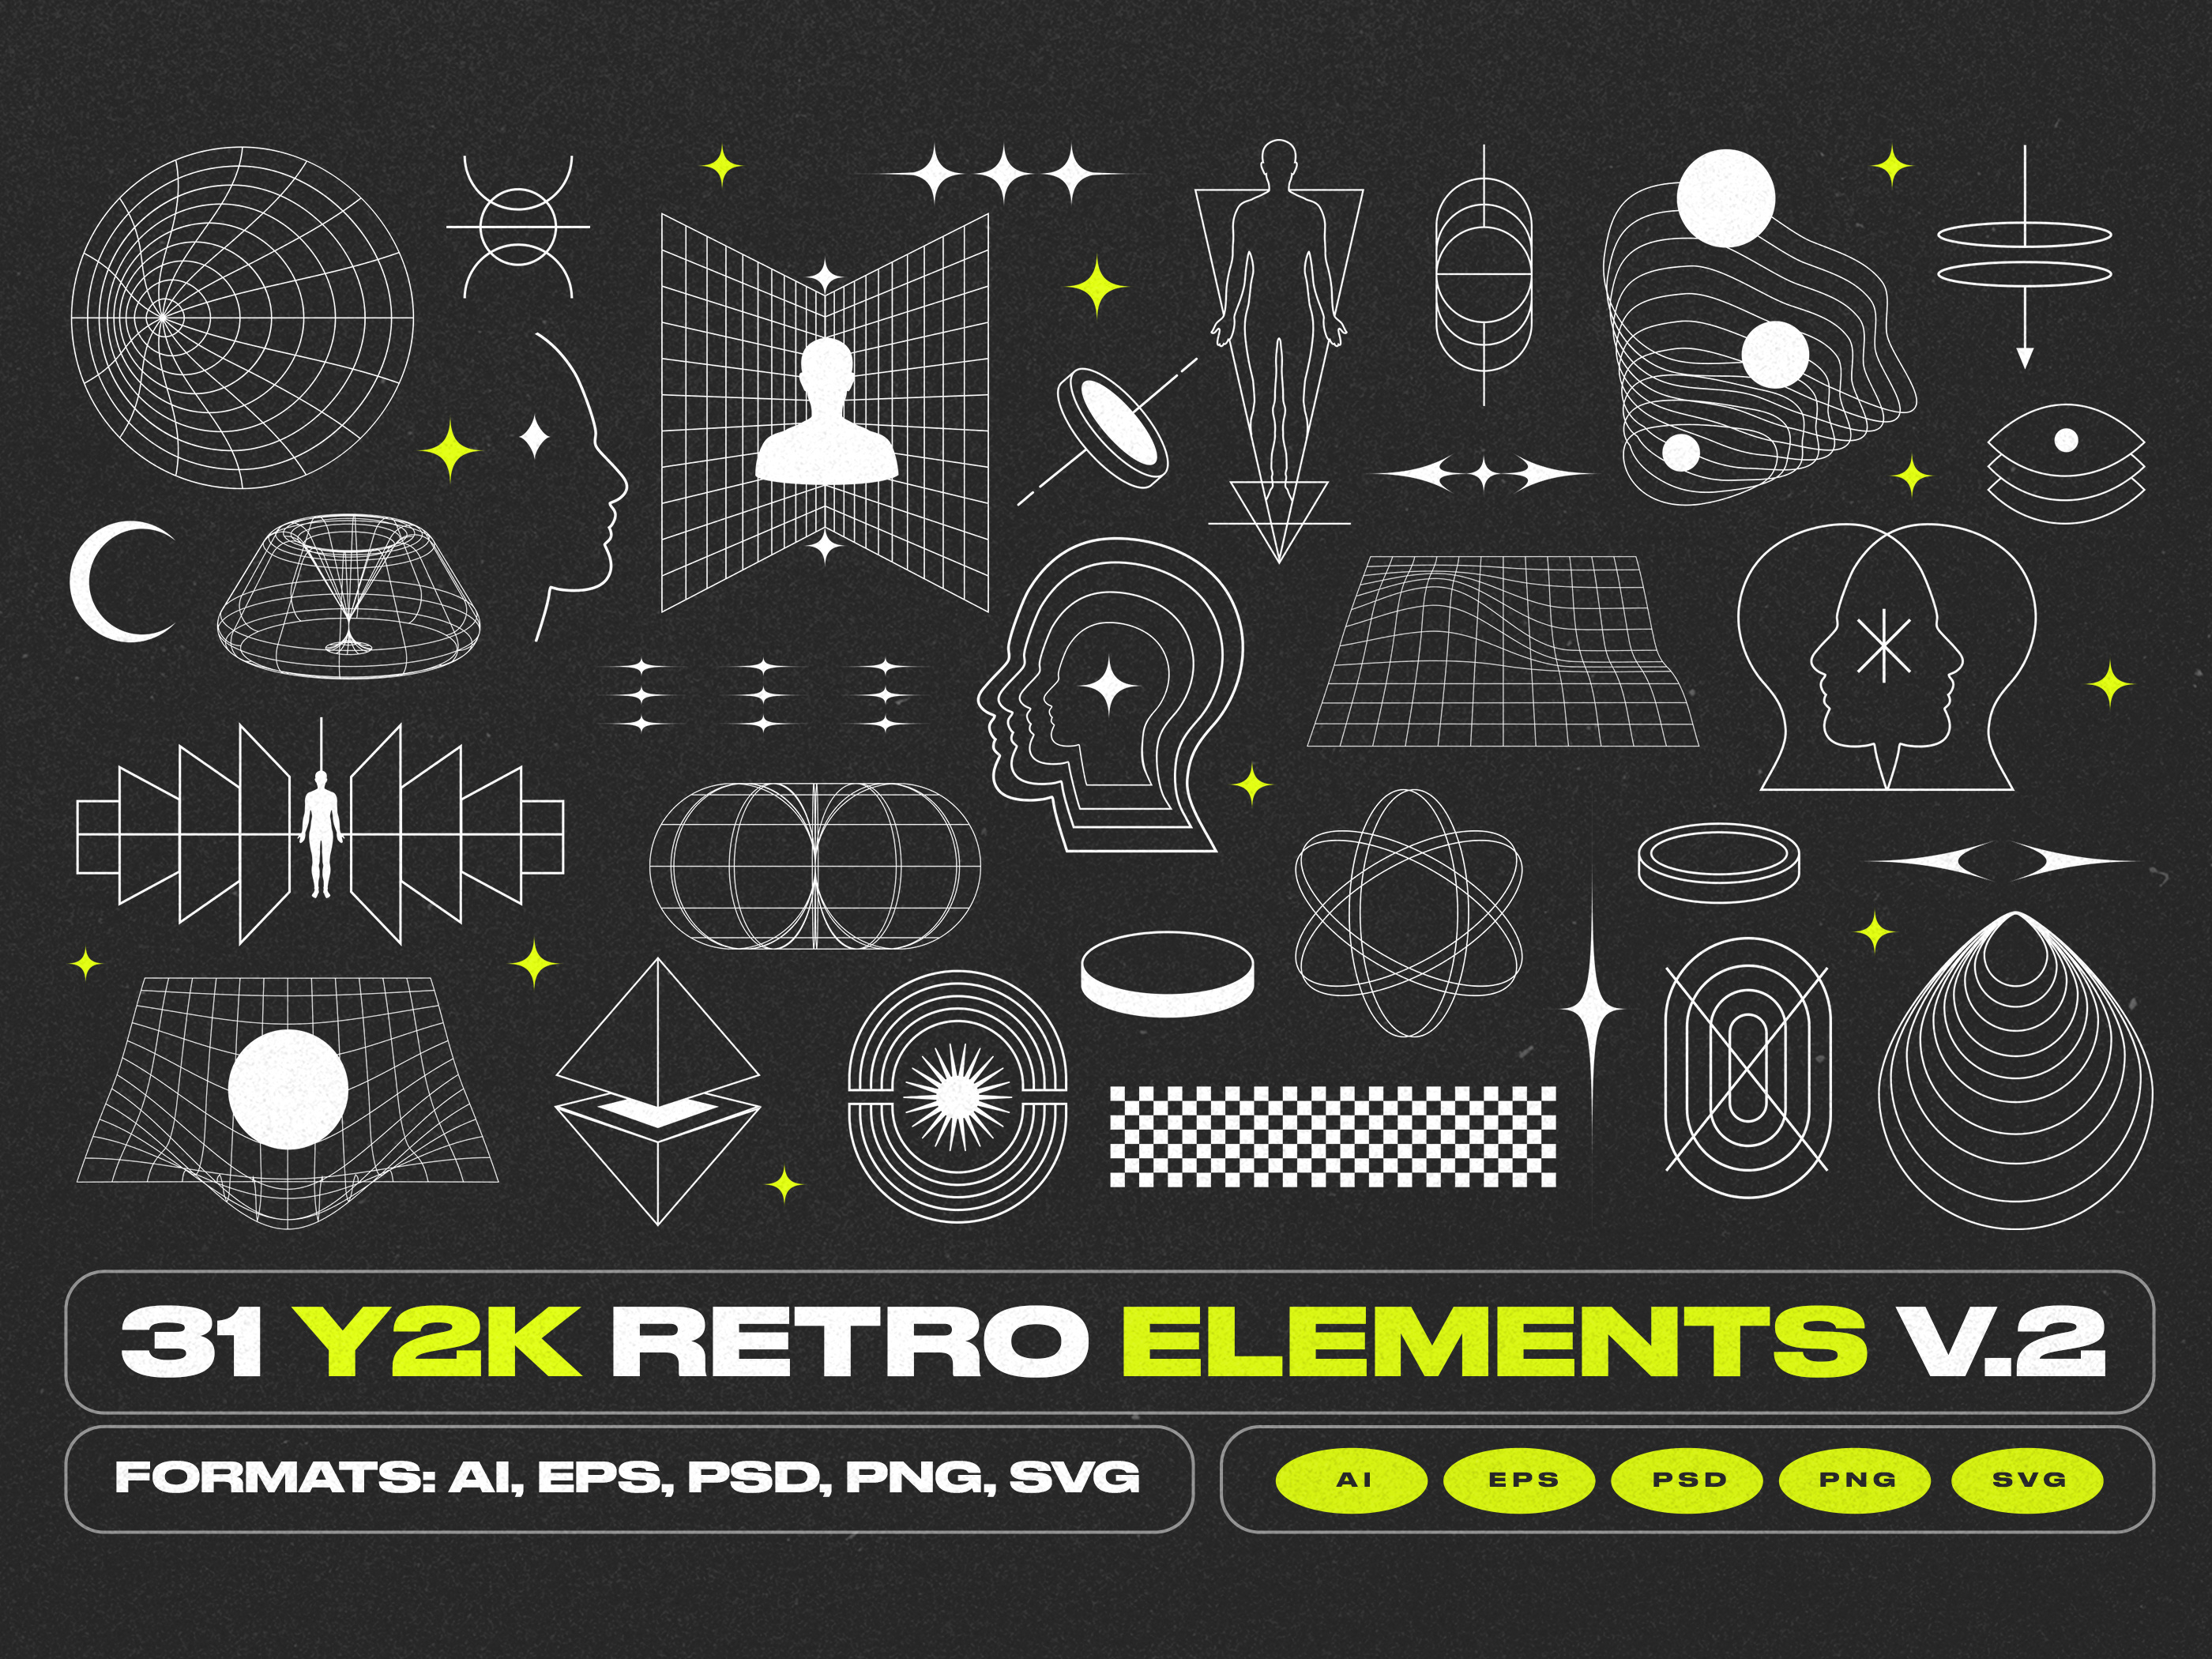 Y2K Design - Design - Envato Elements